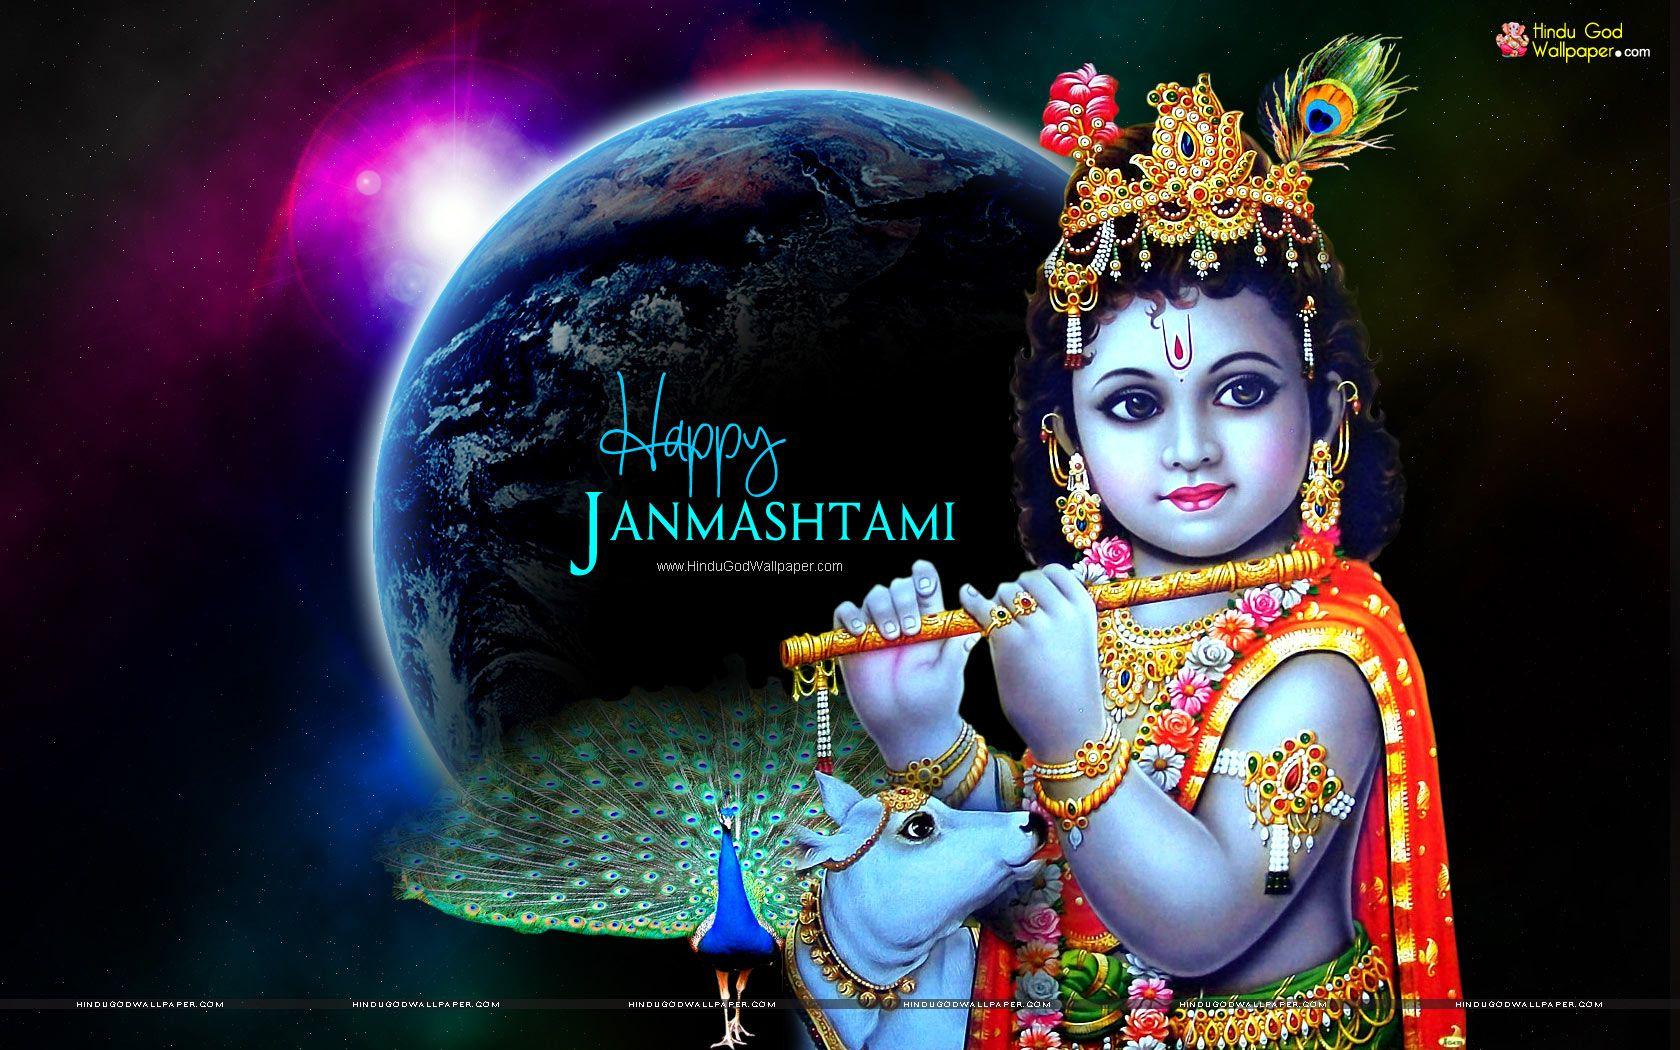 Krishna Janmashtami Wallpaper and Image Download